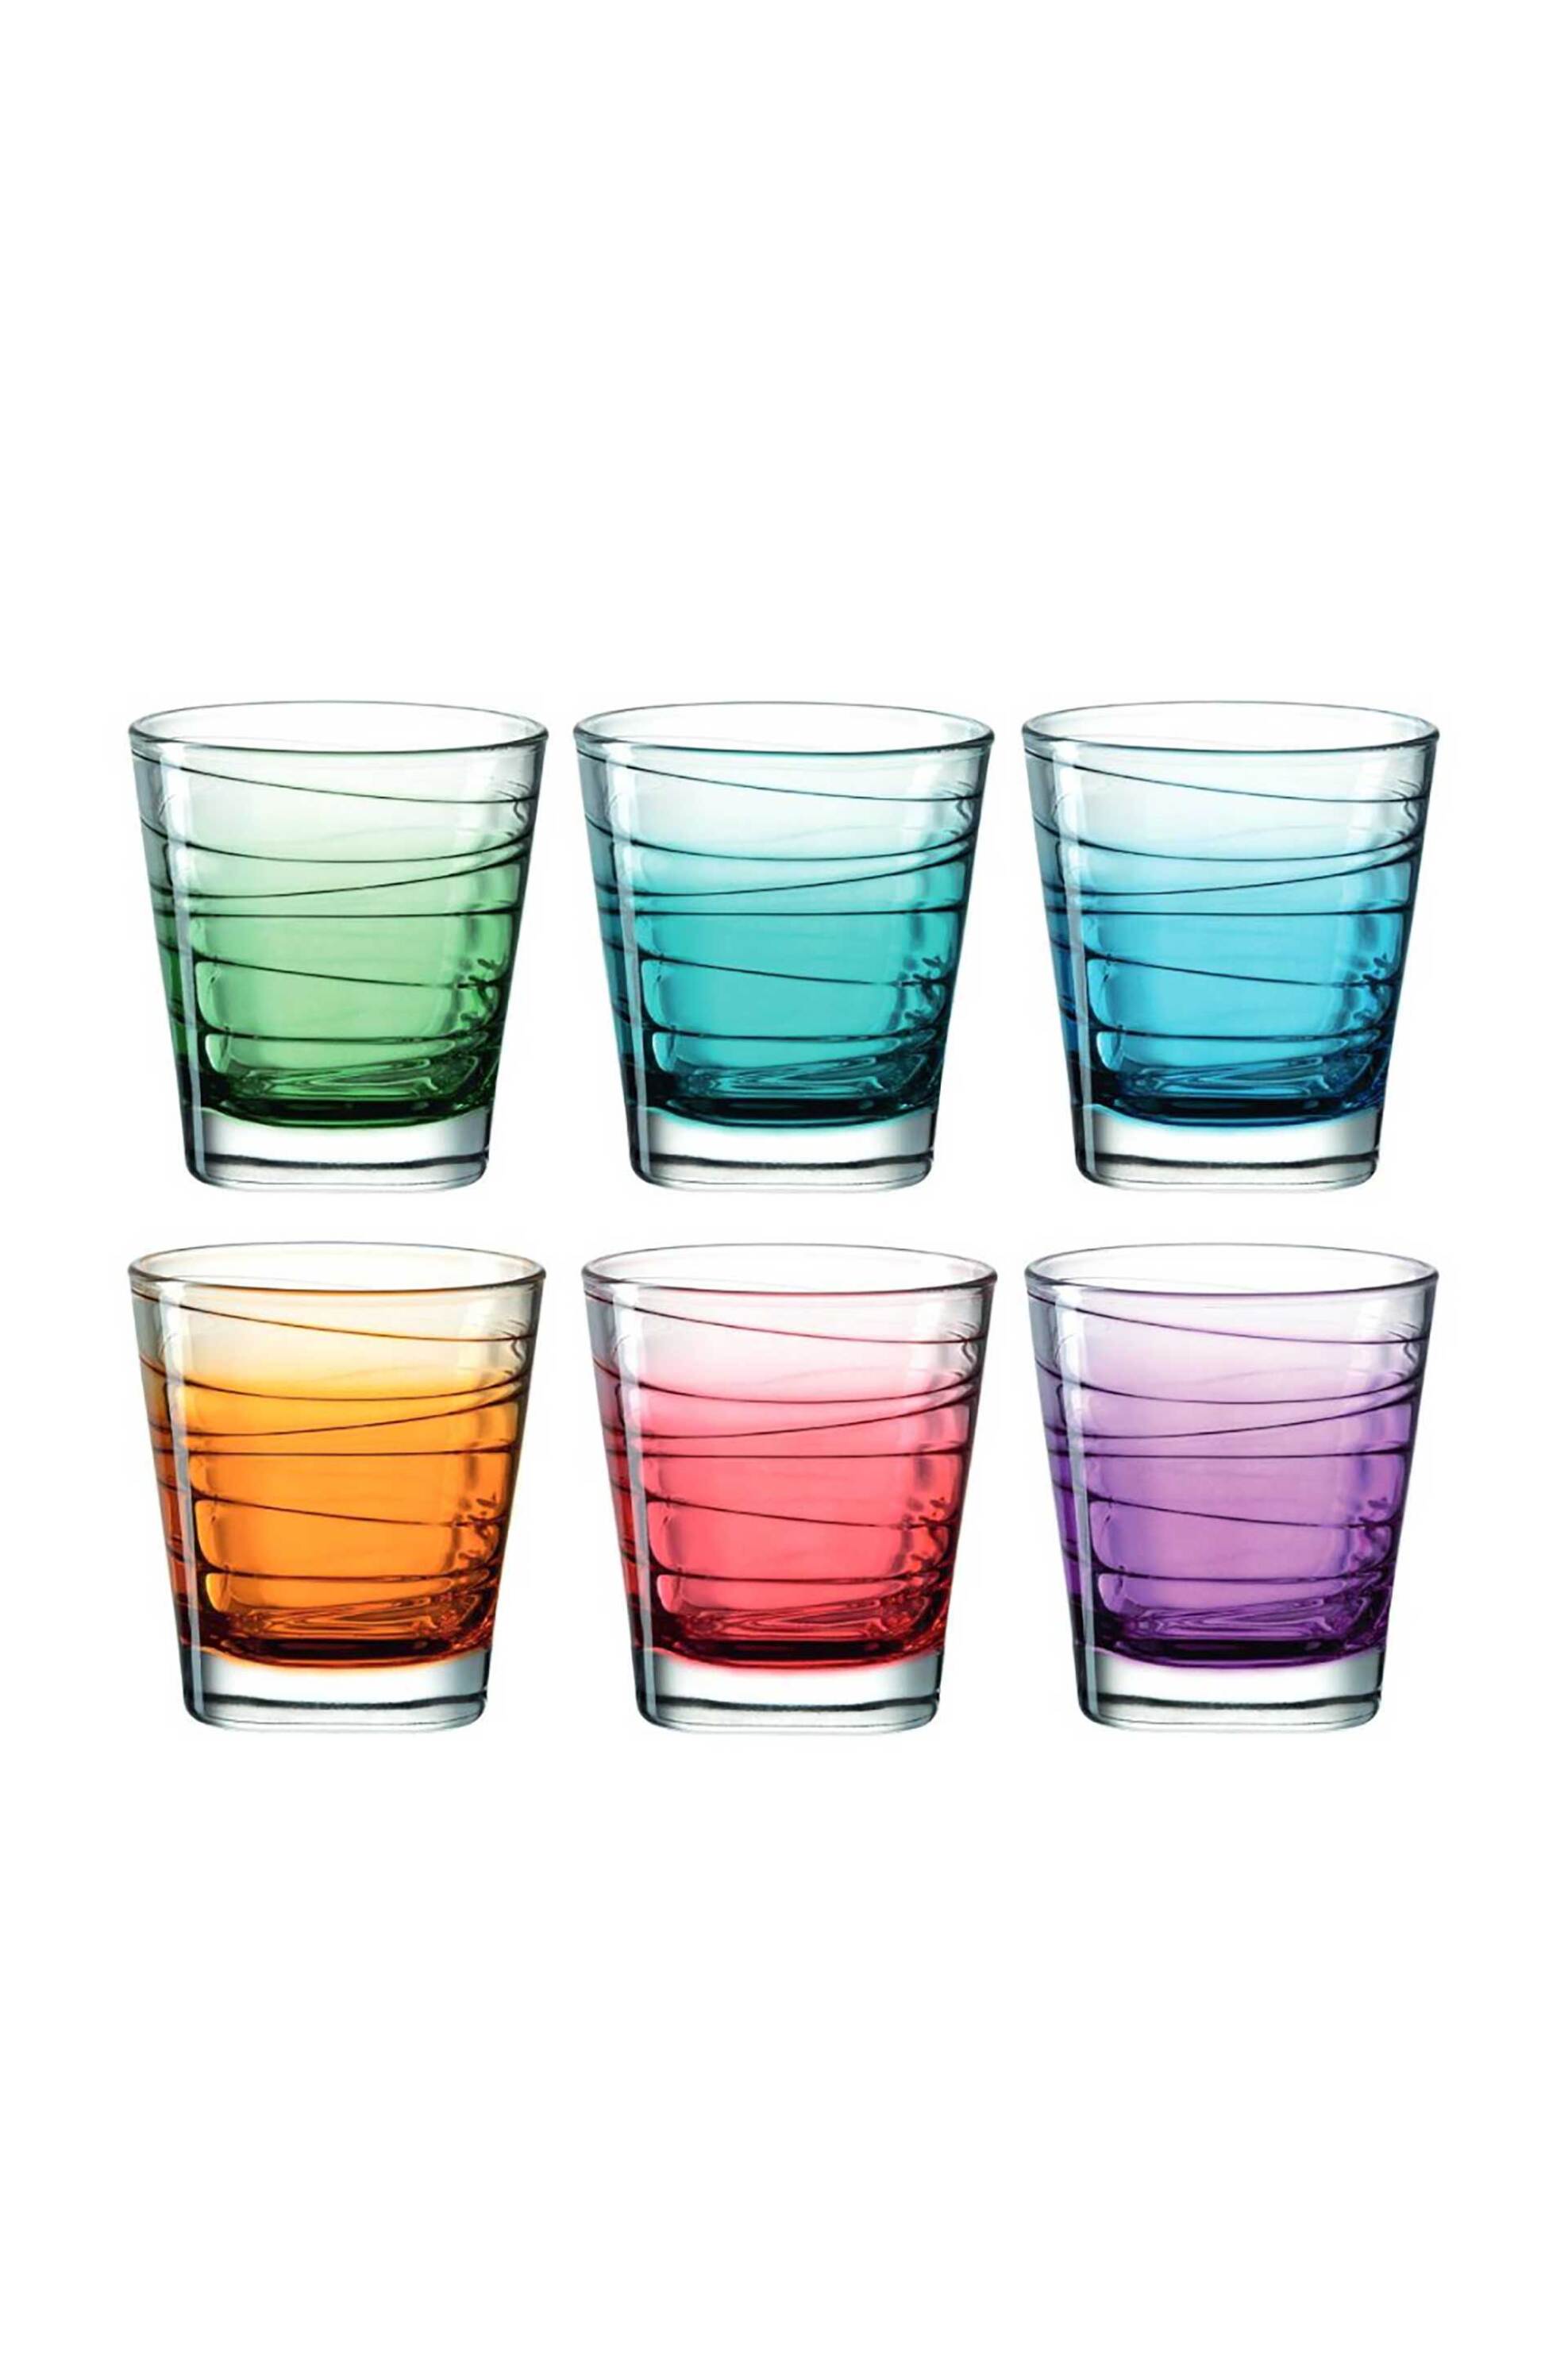 Home > ΚΟΥΖΙΝΑ > Υαλικά > Ποτήρια Leonardo σετ γυάλινα ποτήρια νερού πολύχρωμα "Vario Struttura" 250 ml - 026844L